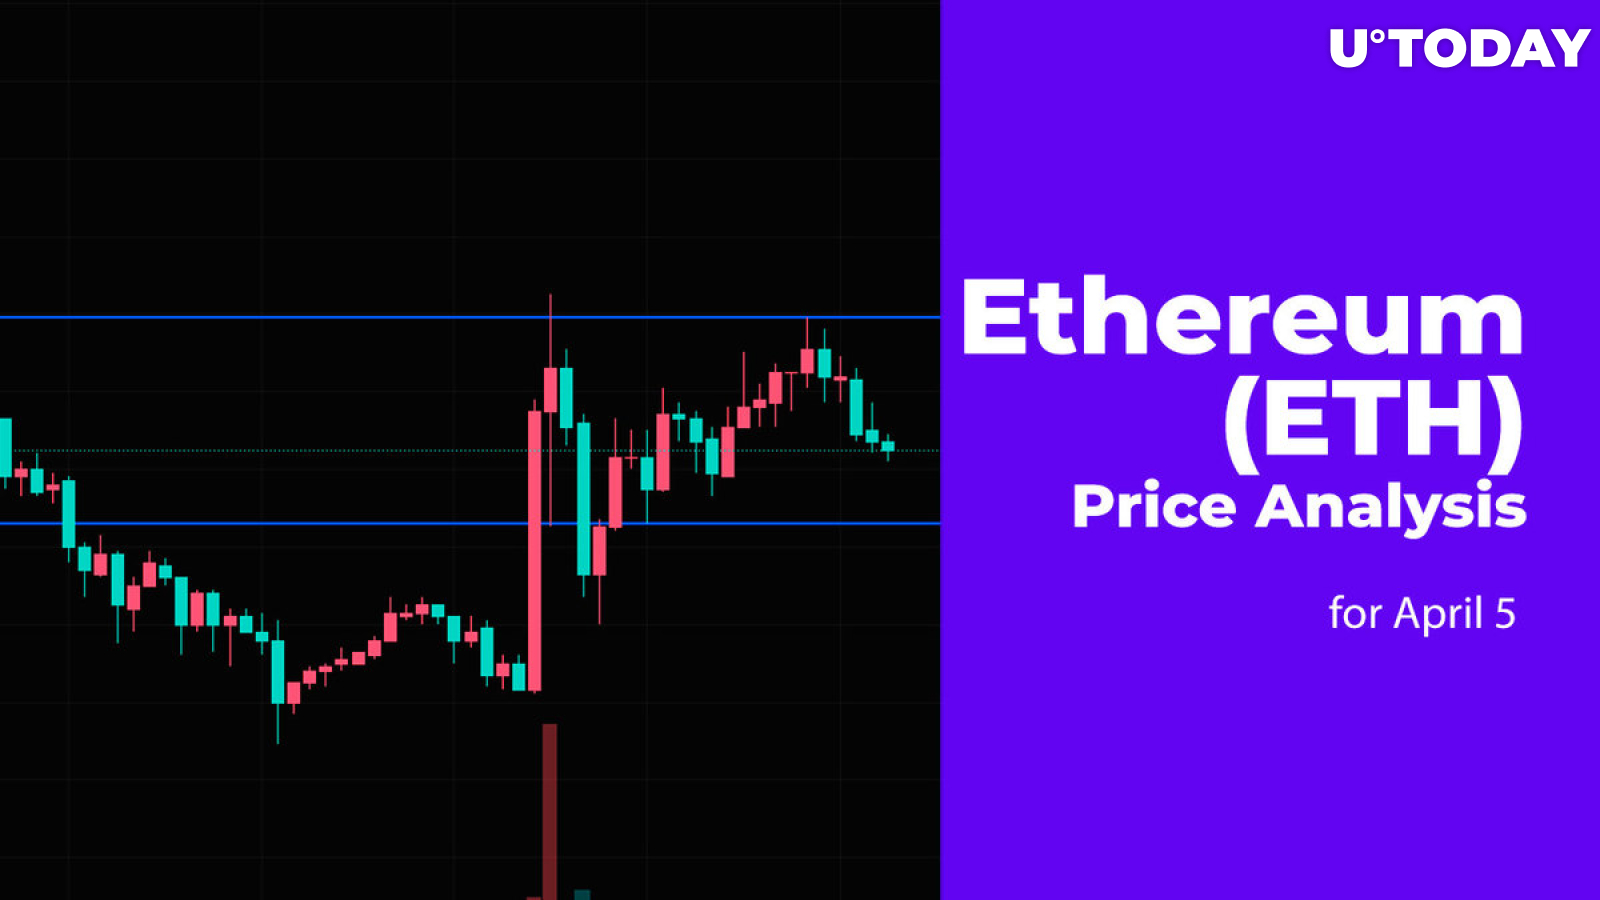 Ethereum (ETH) Price Analysis for April 5